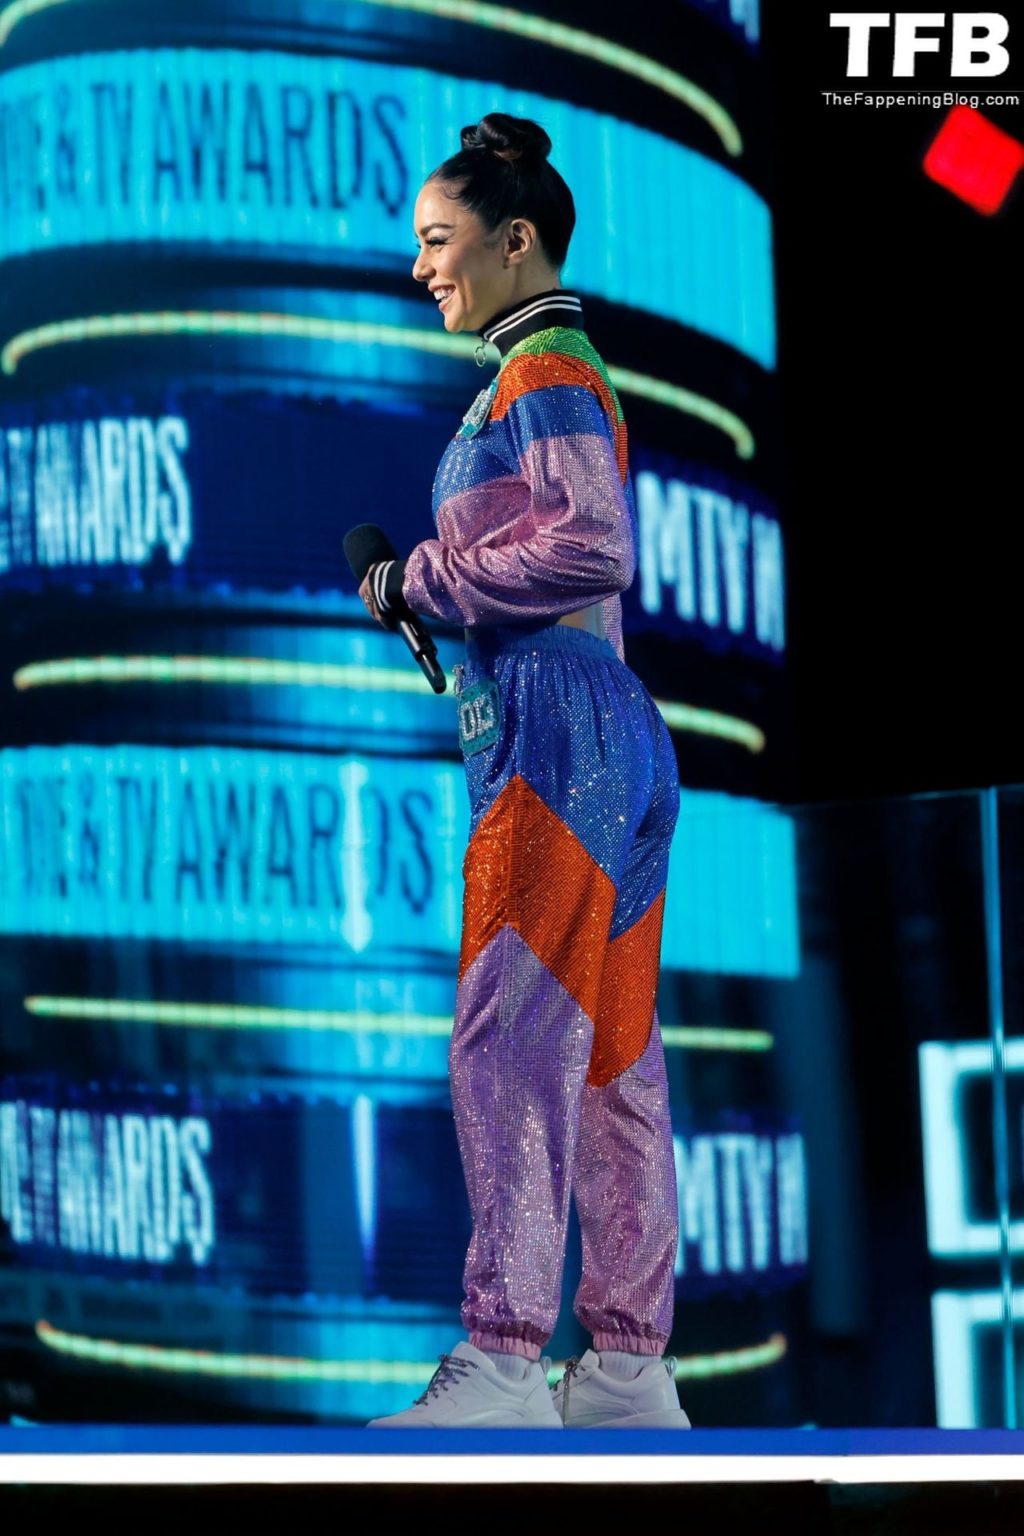 Vanessa Hudgens Flaunts Her Stunning Figure at the MTV Movie and TV Awards (130 Photos)